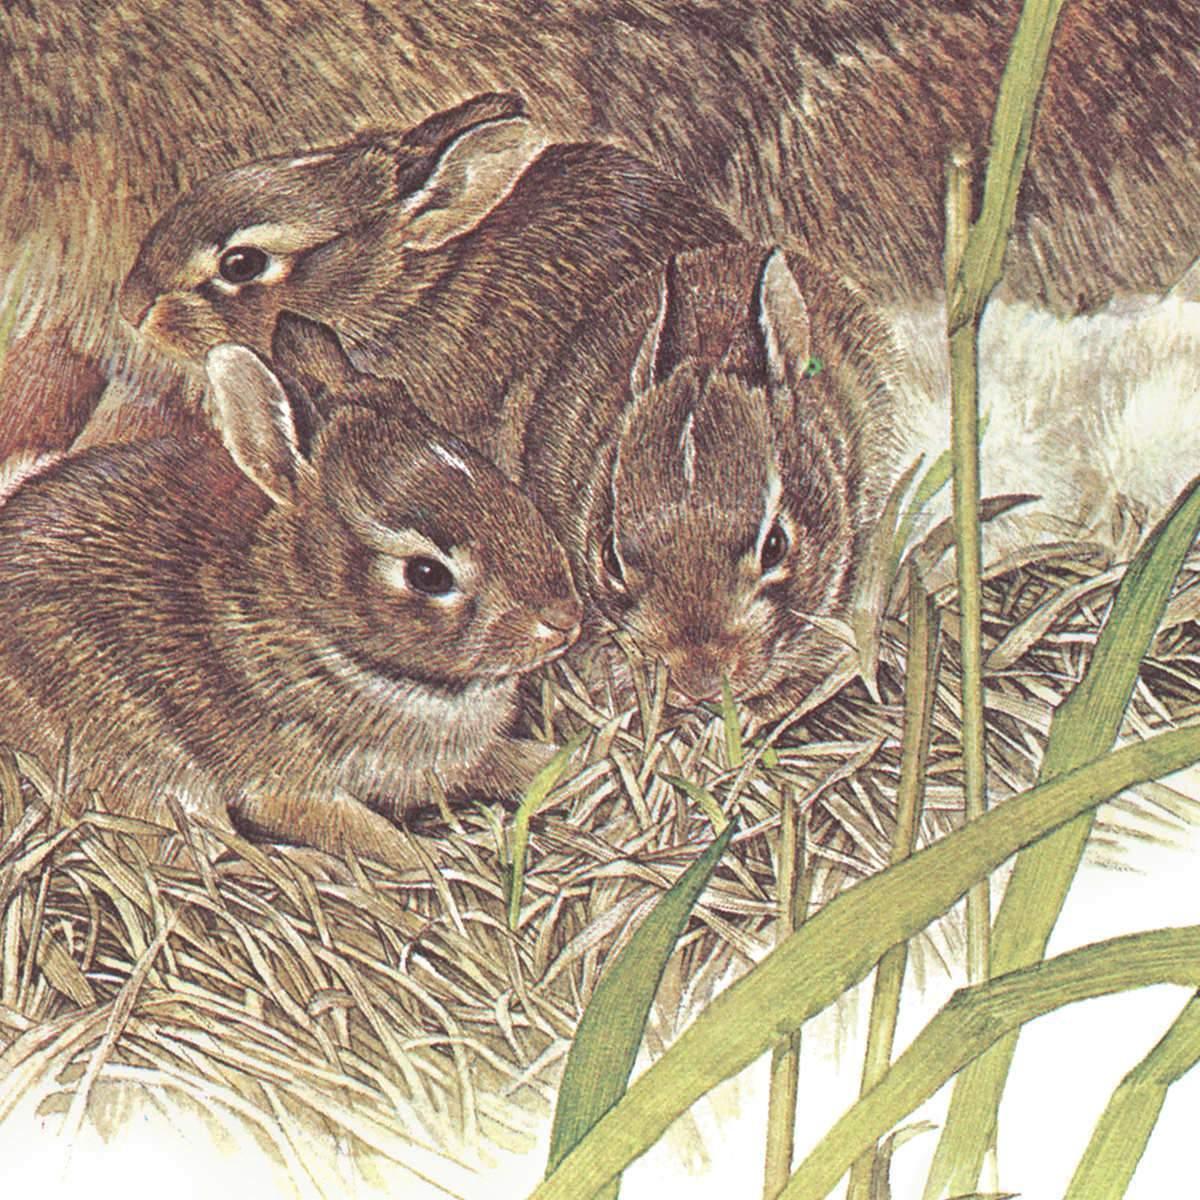 Cottontail Rabbit - Canvas Print | Artwork by Glen Loates